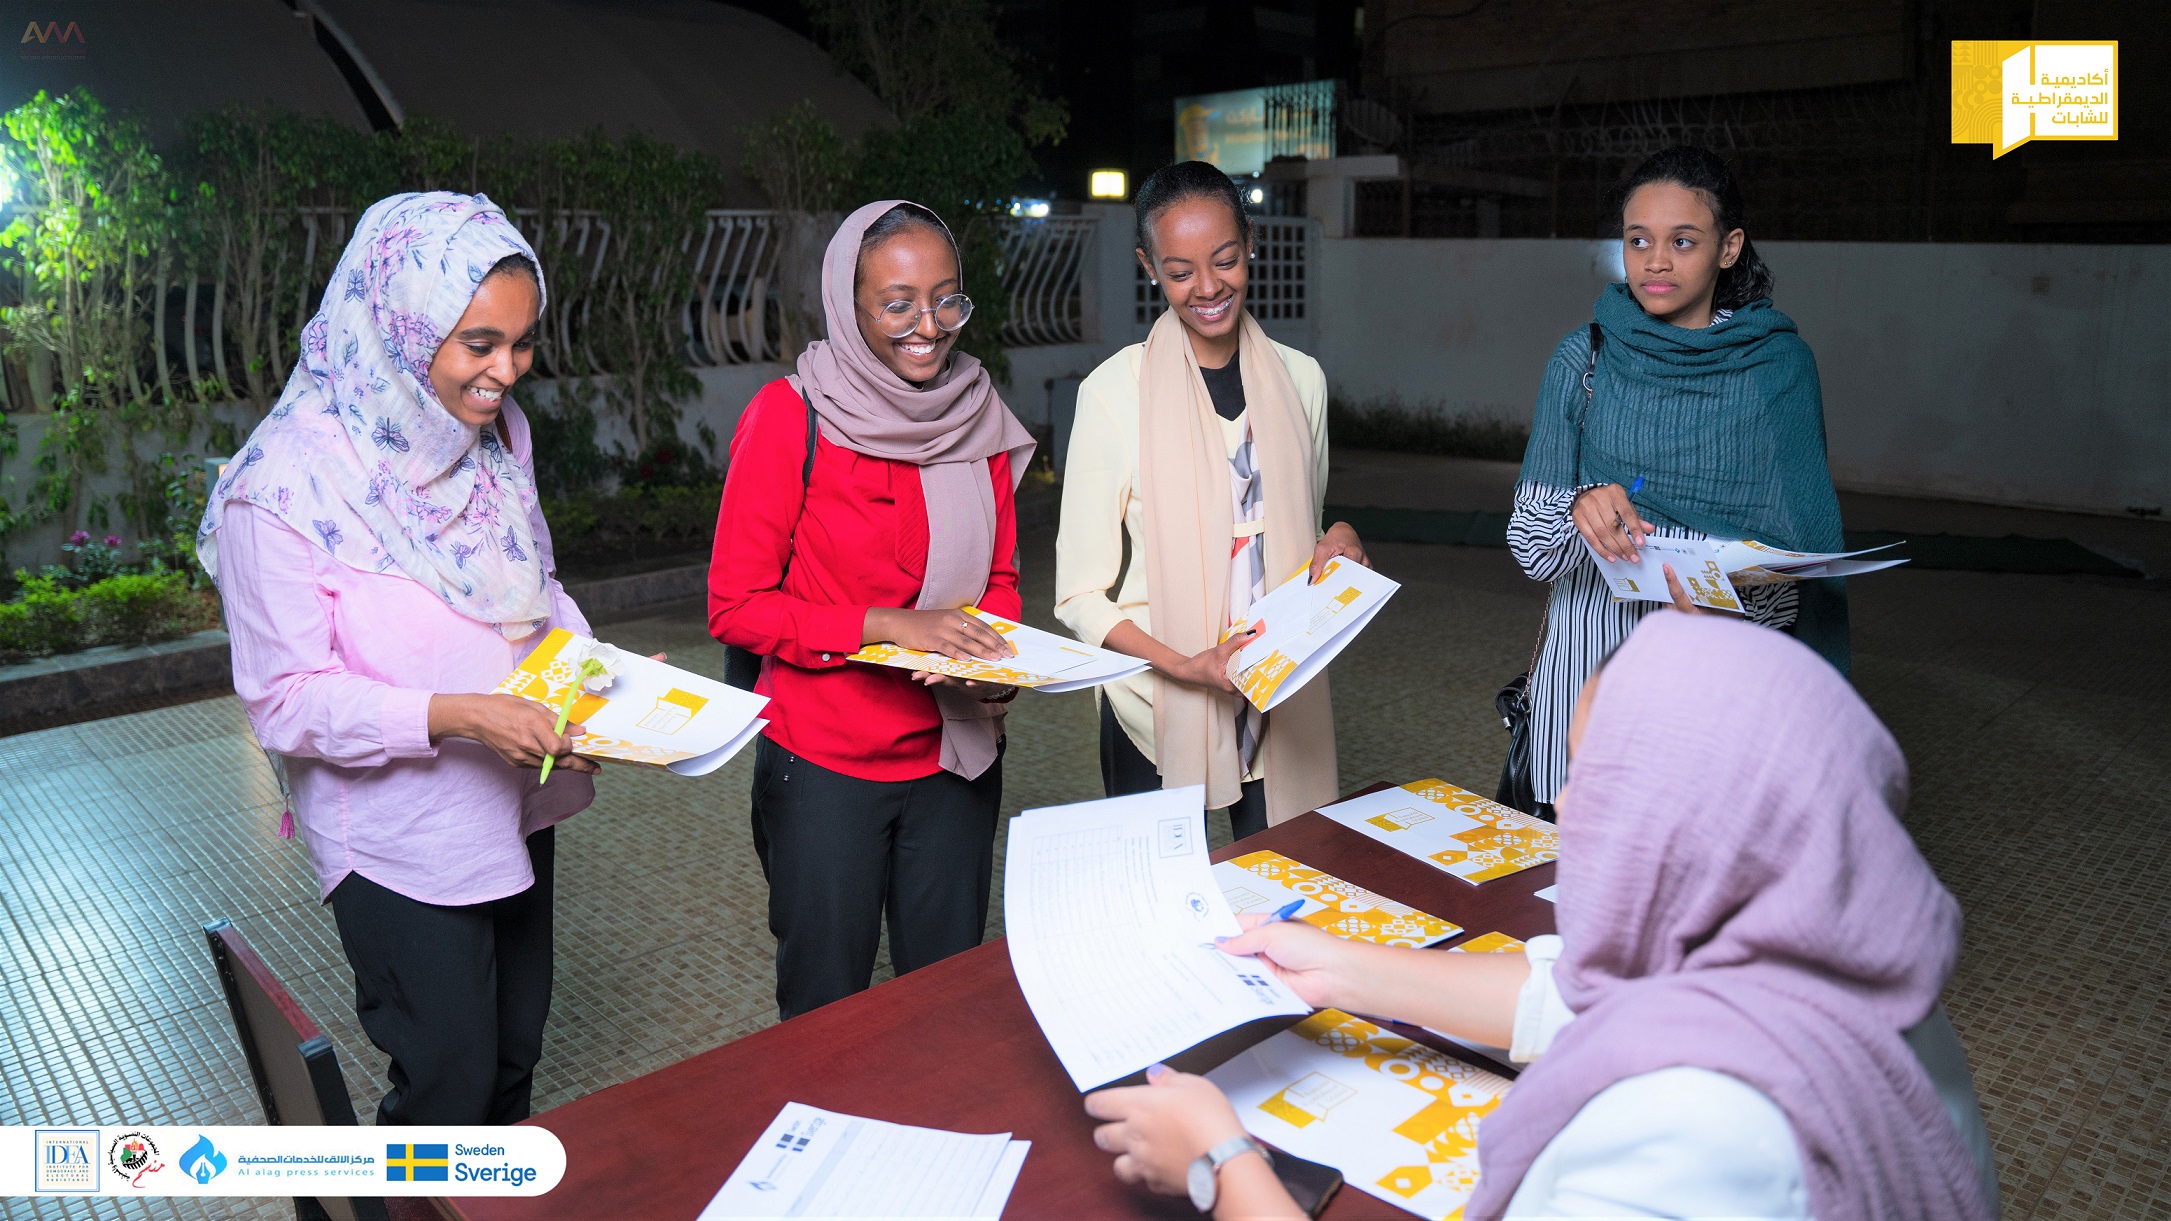 Participants of the academy during registration. Khartoum, Sudan by International IDEA 